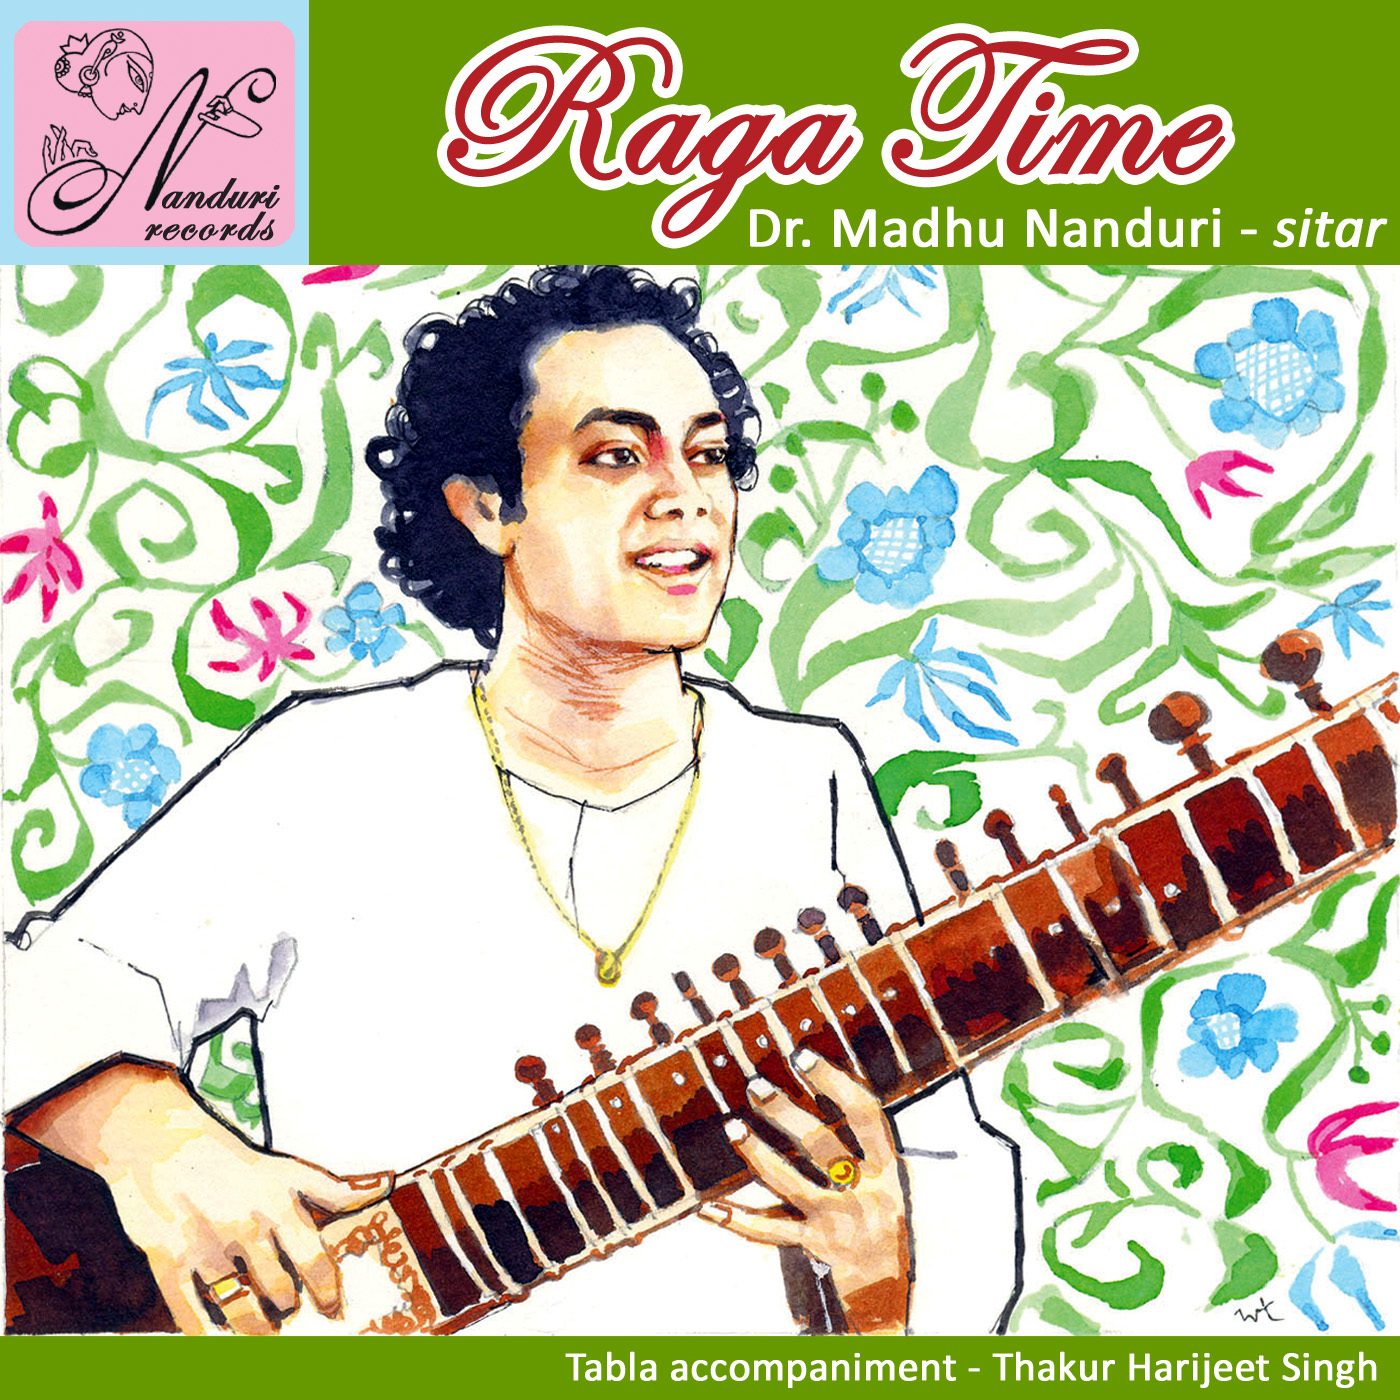 Raga Time Cover